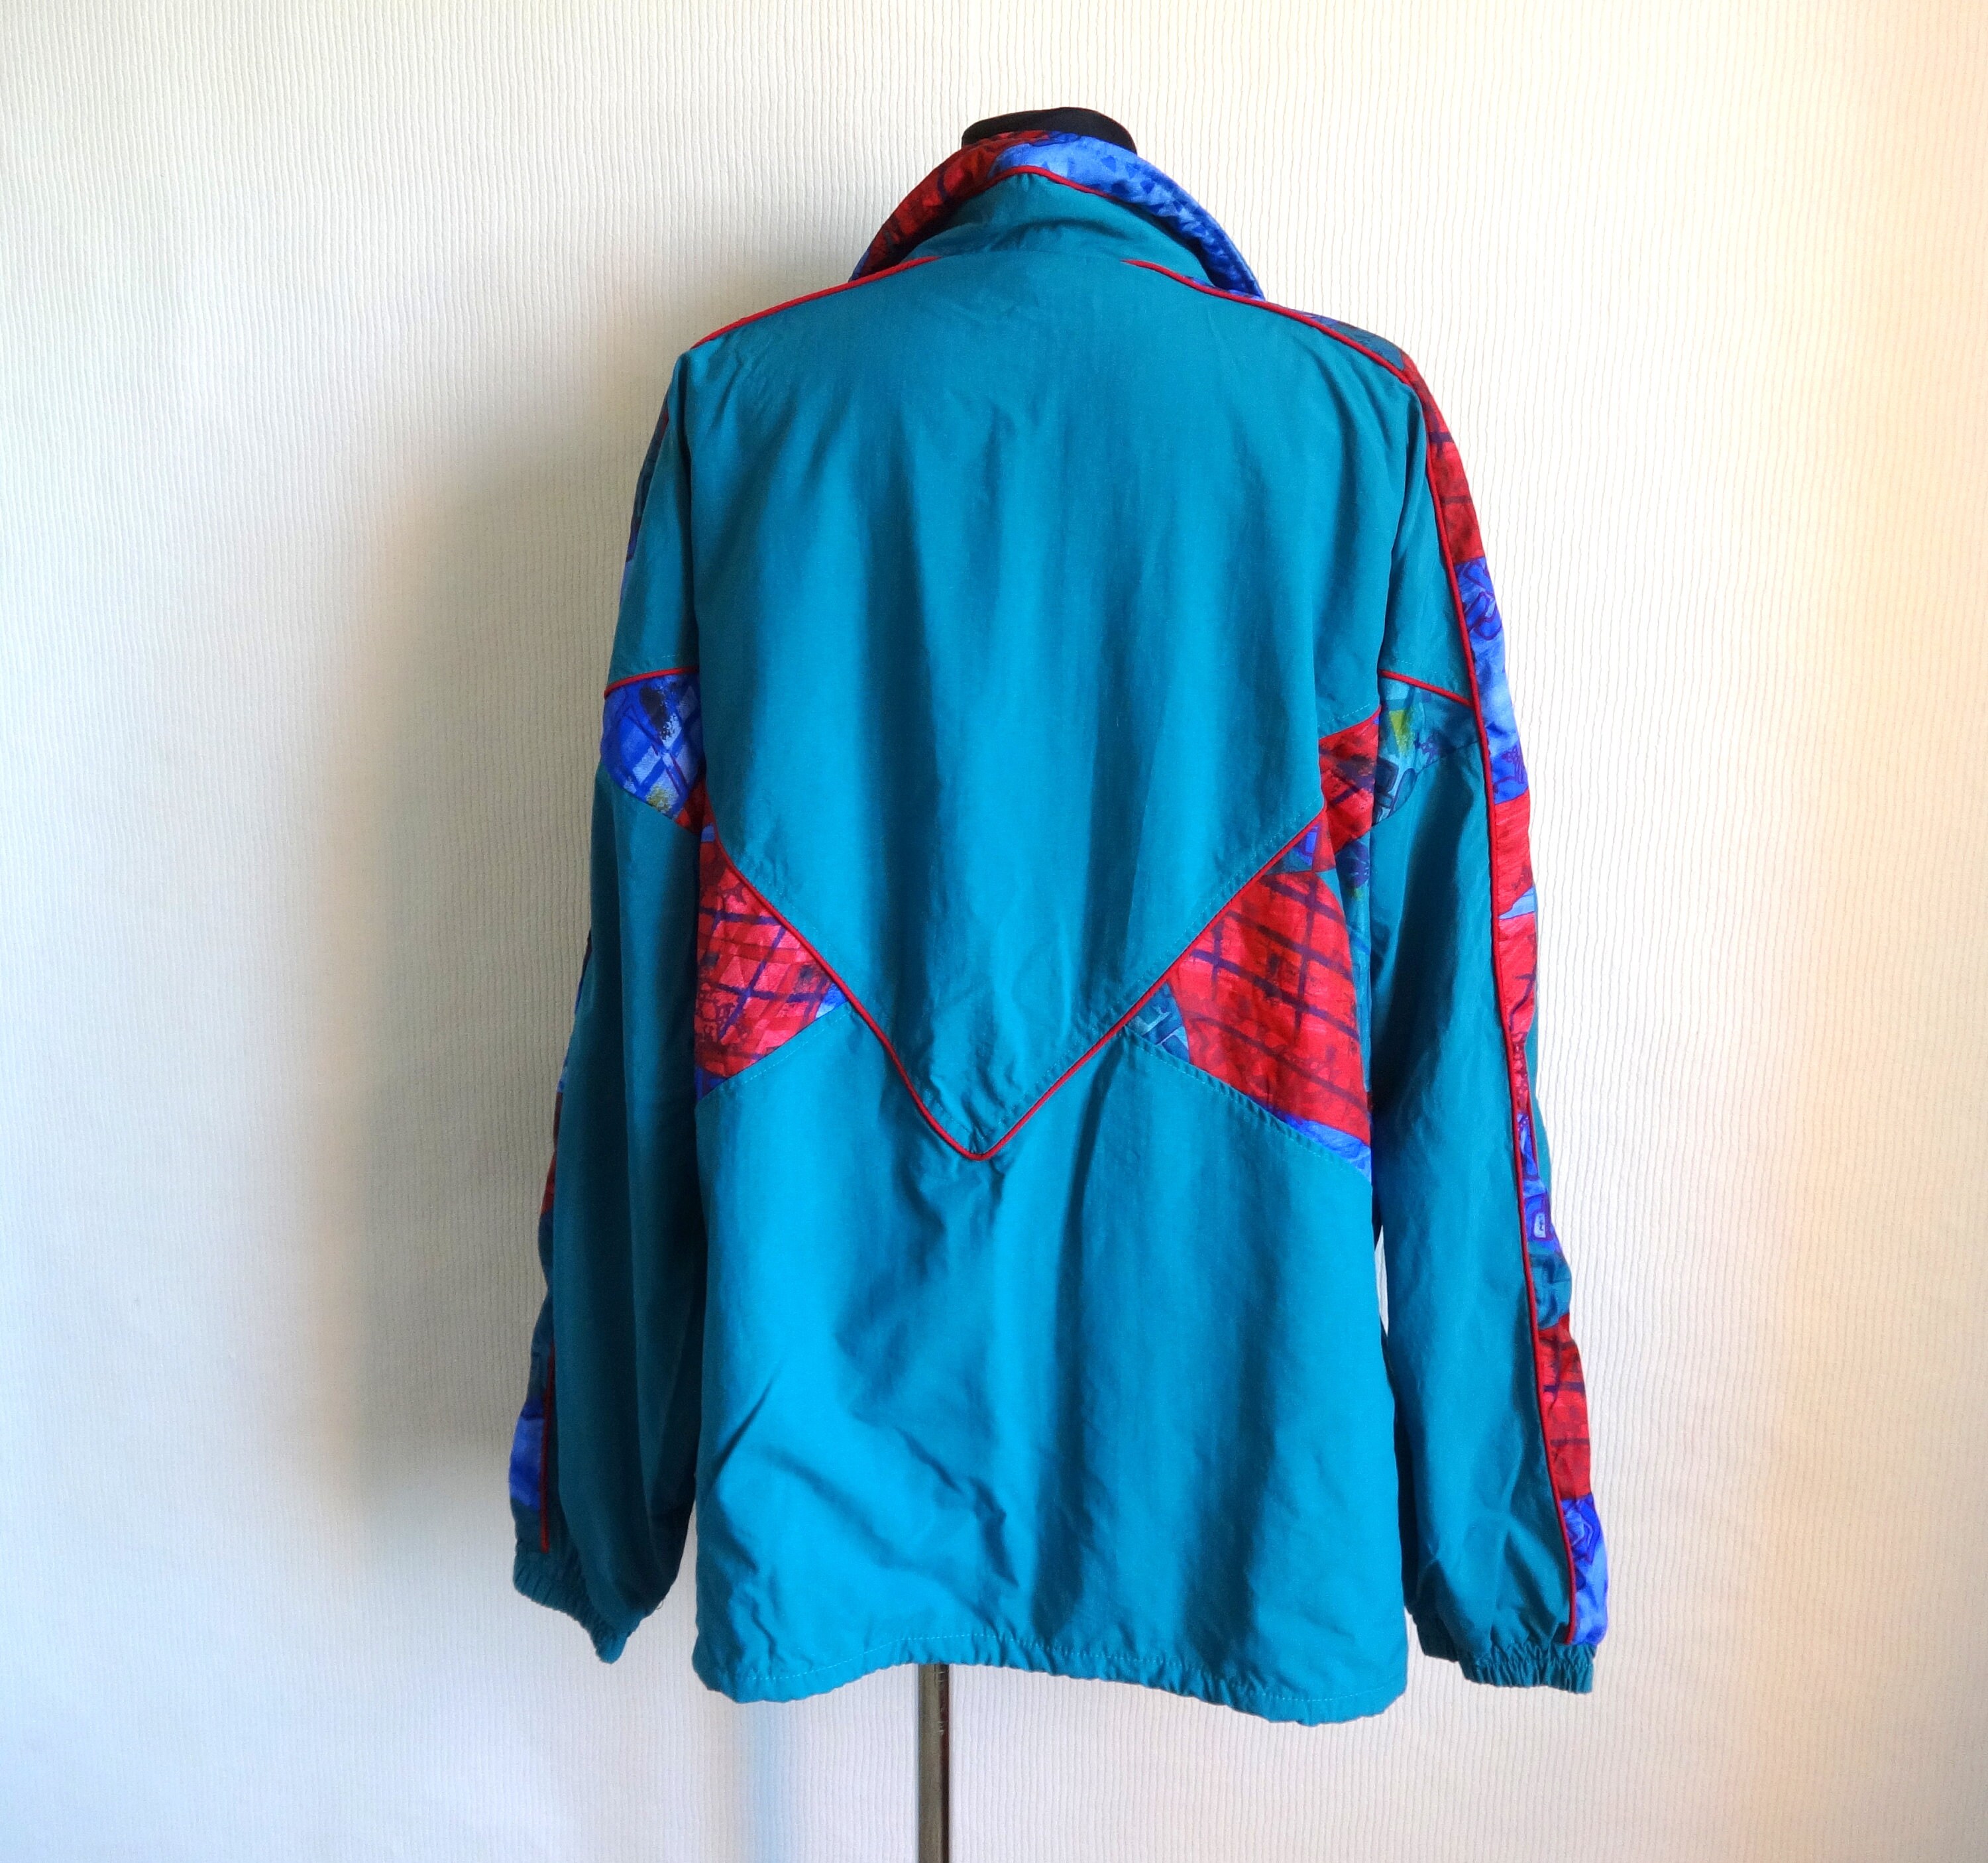 Vintage Windbreaker Sports Jacket Unisex Teal Zip up Jacket - Etsy